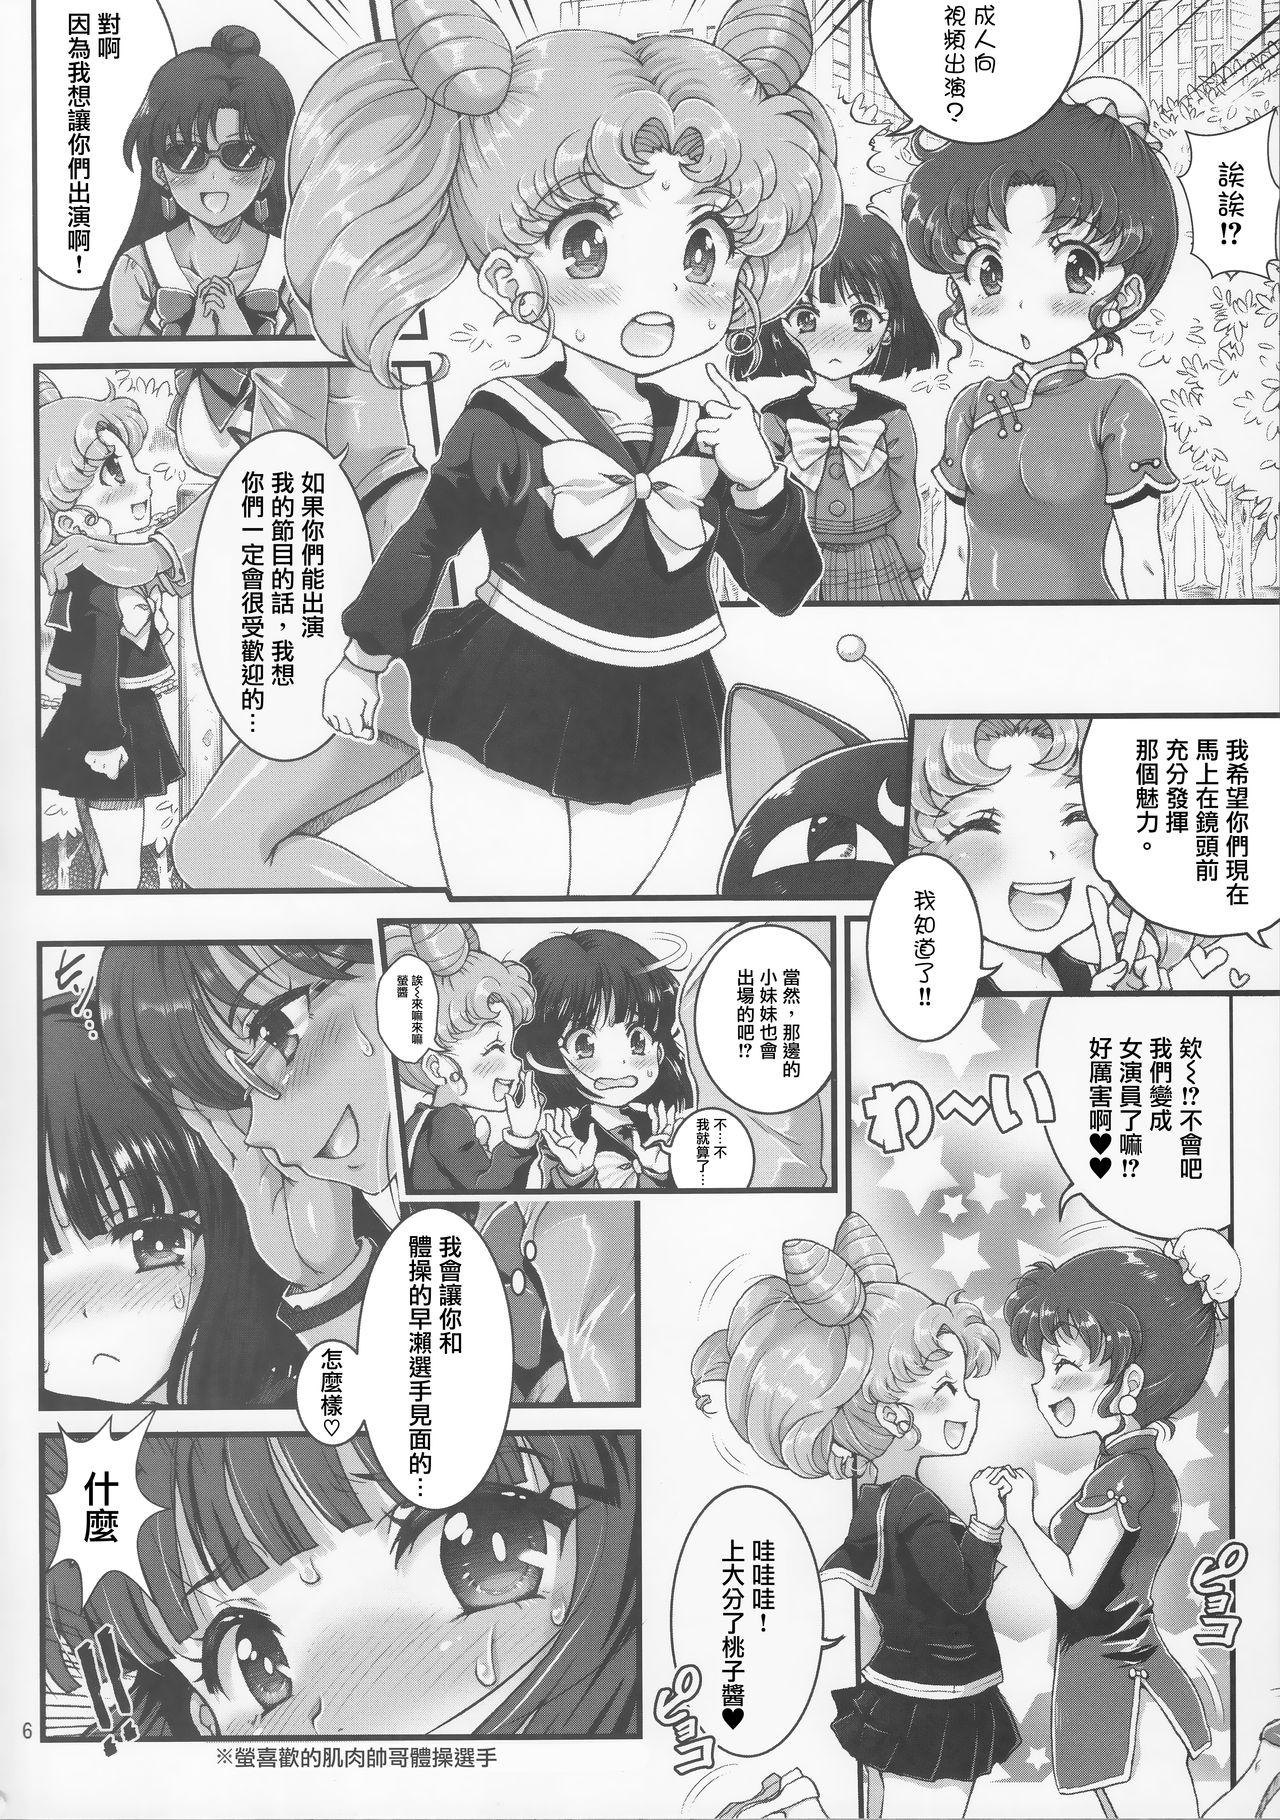 Sailor AV Kikaku 5